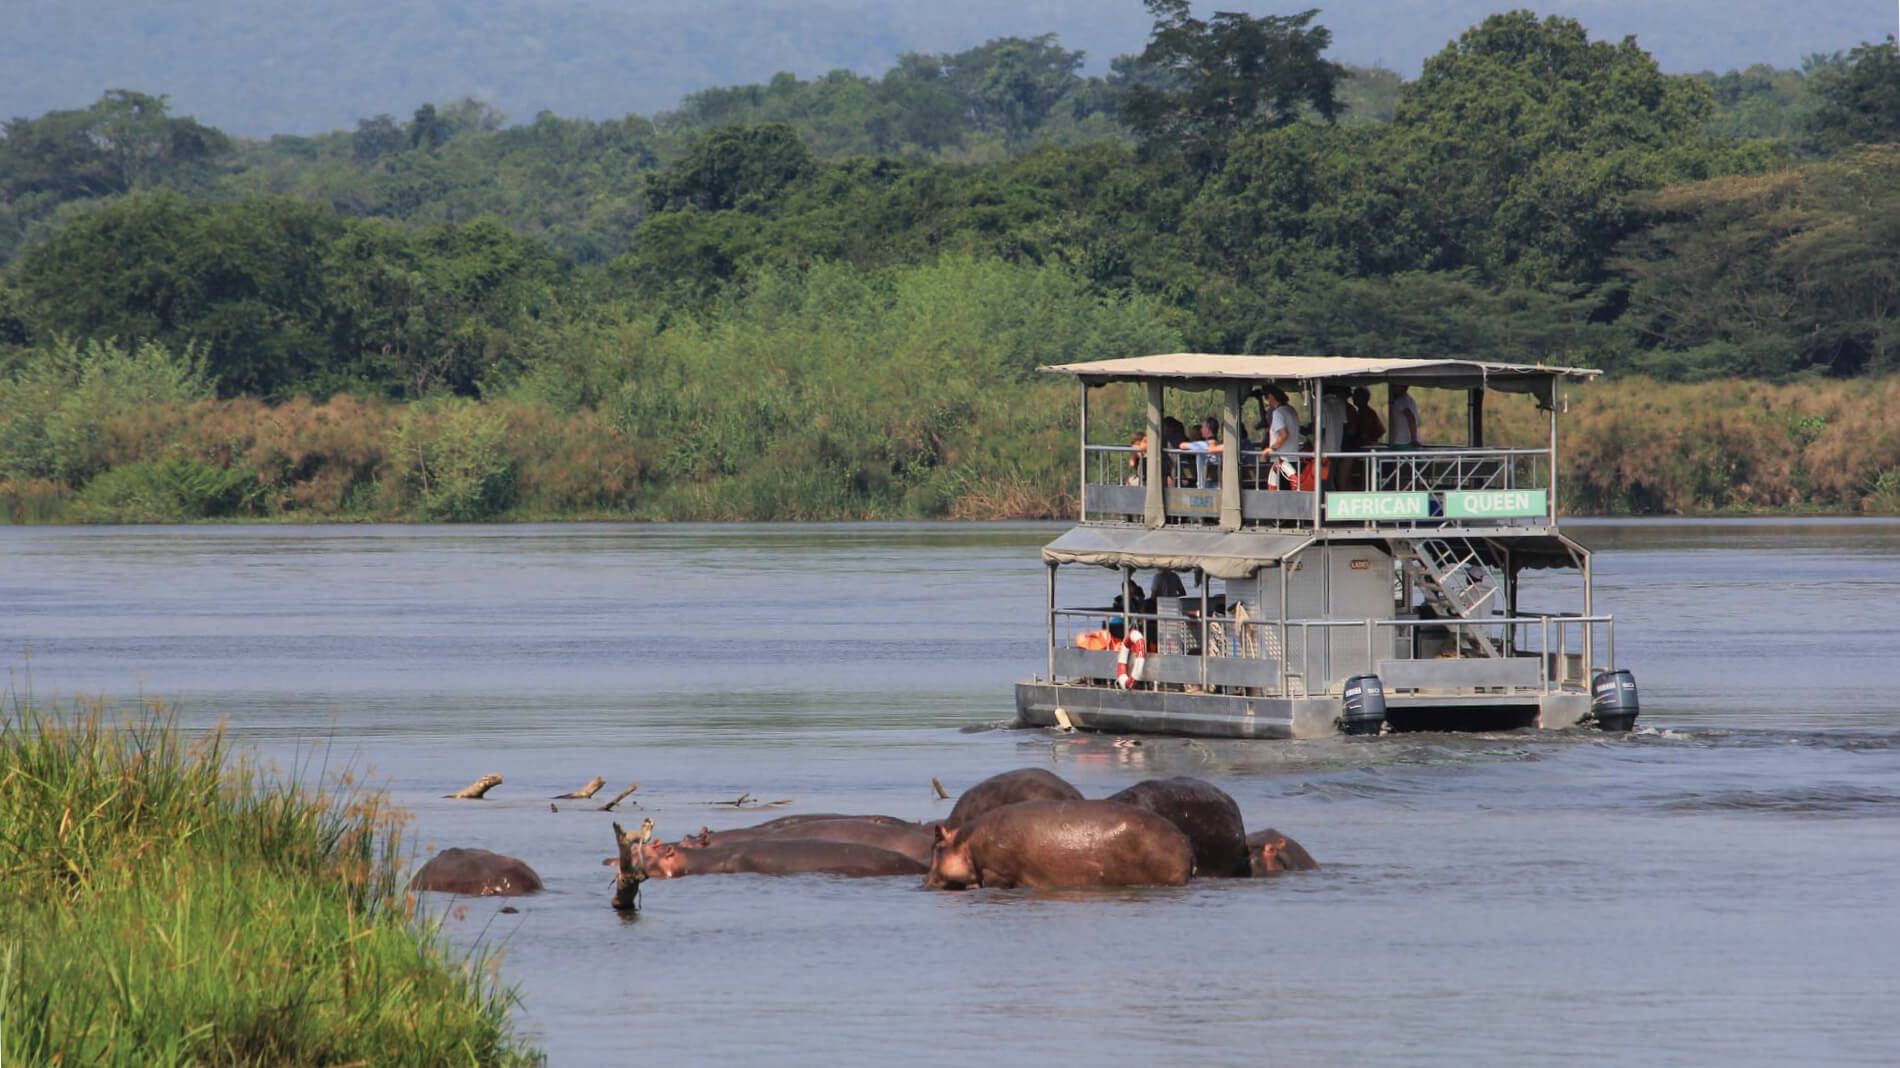 uganda safari in february